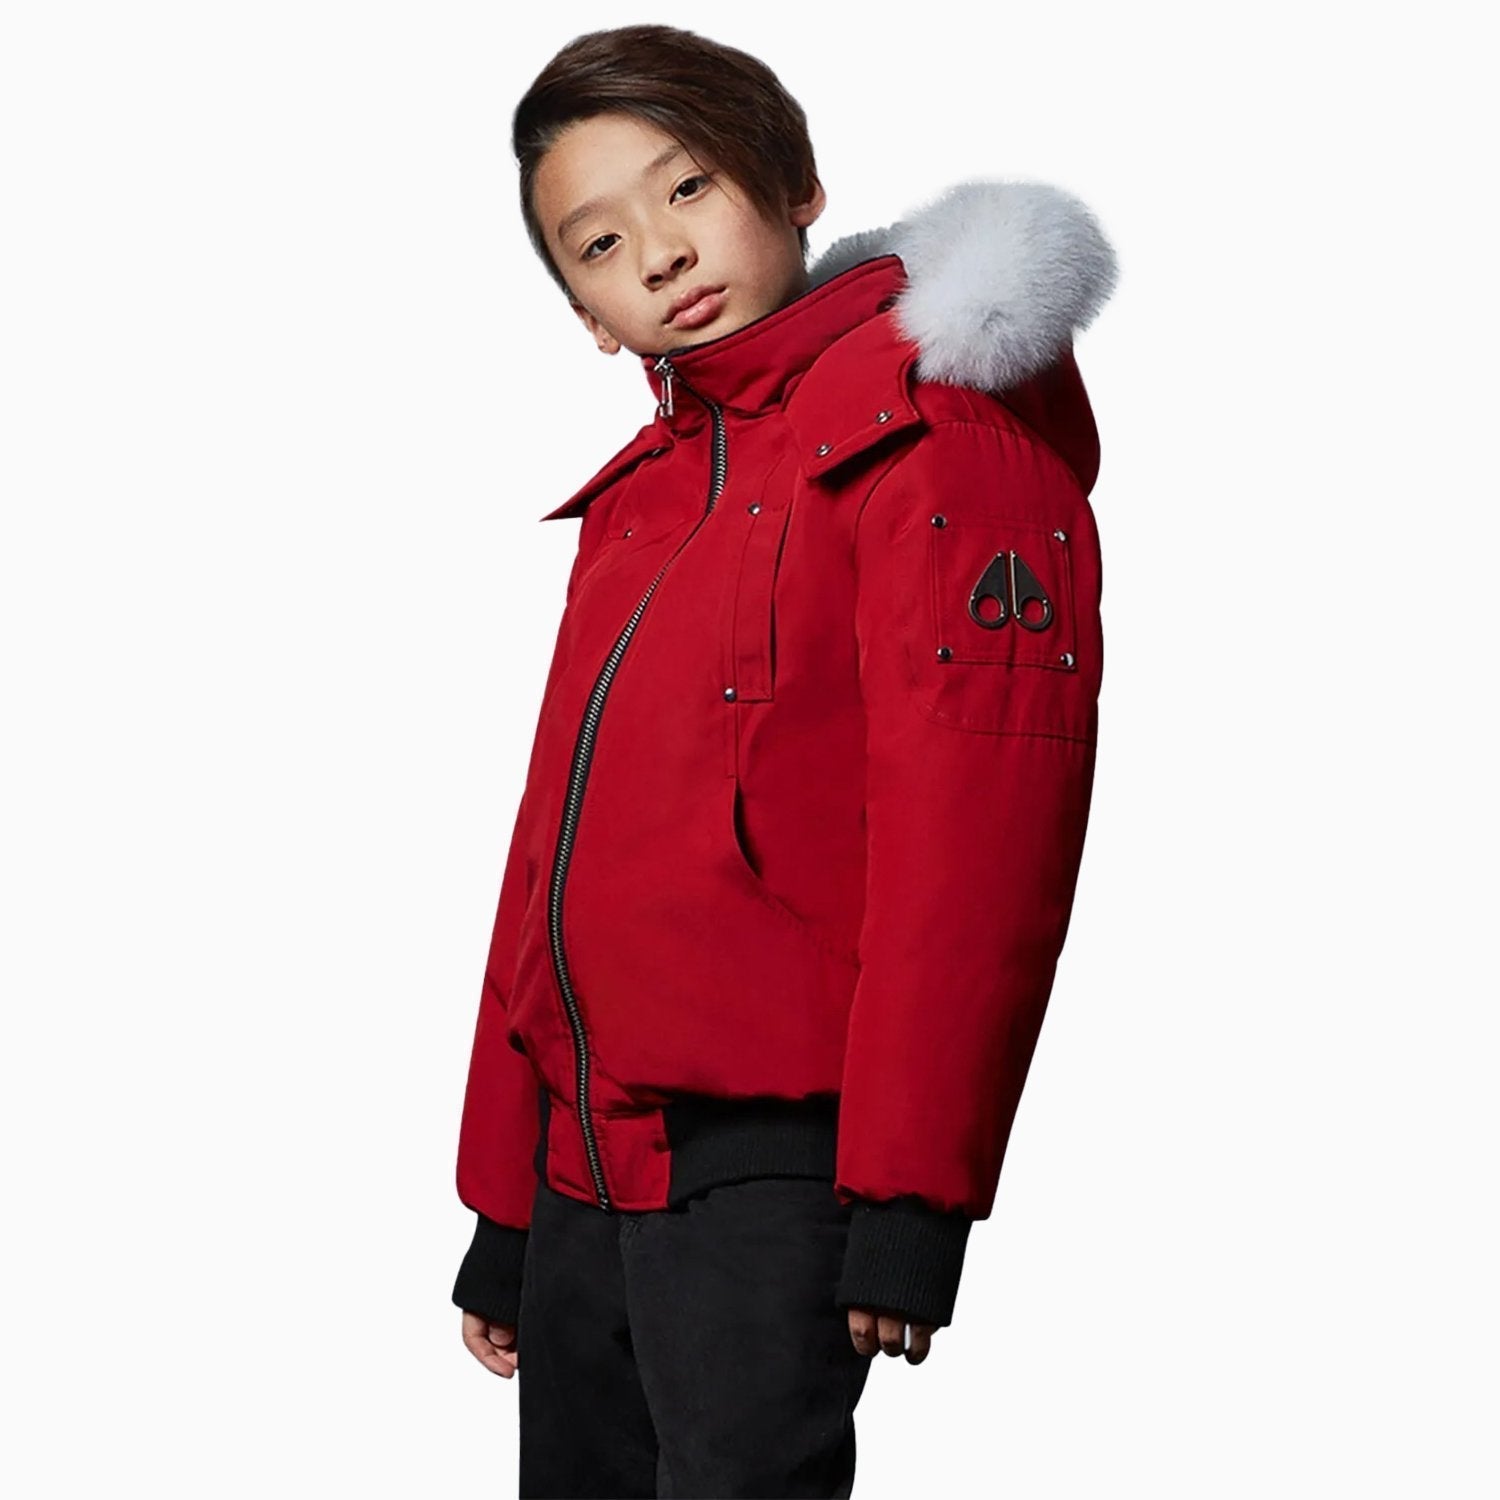 Moose Knuckles Kid's Bomber Jacket With Fur Hood - Color: Deep Red - Kids Premium Clothing -